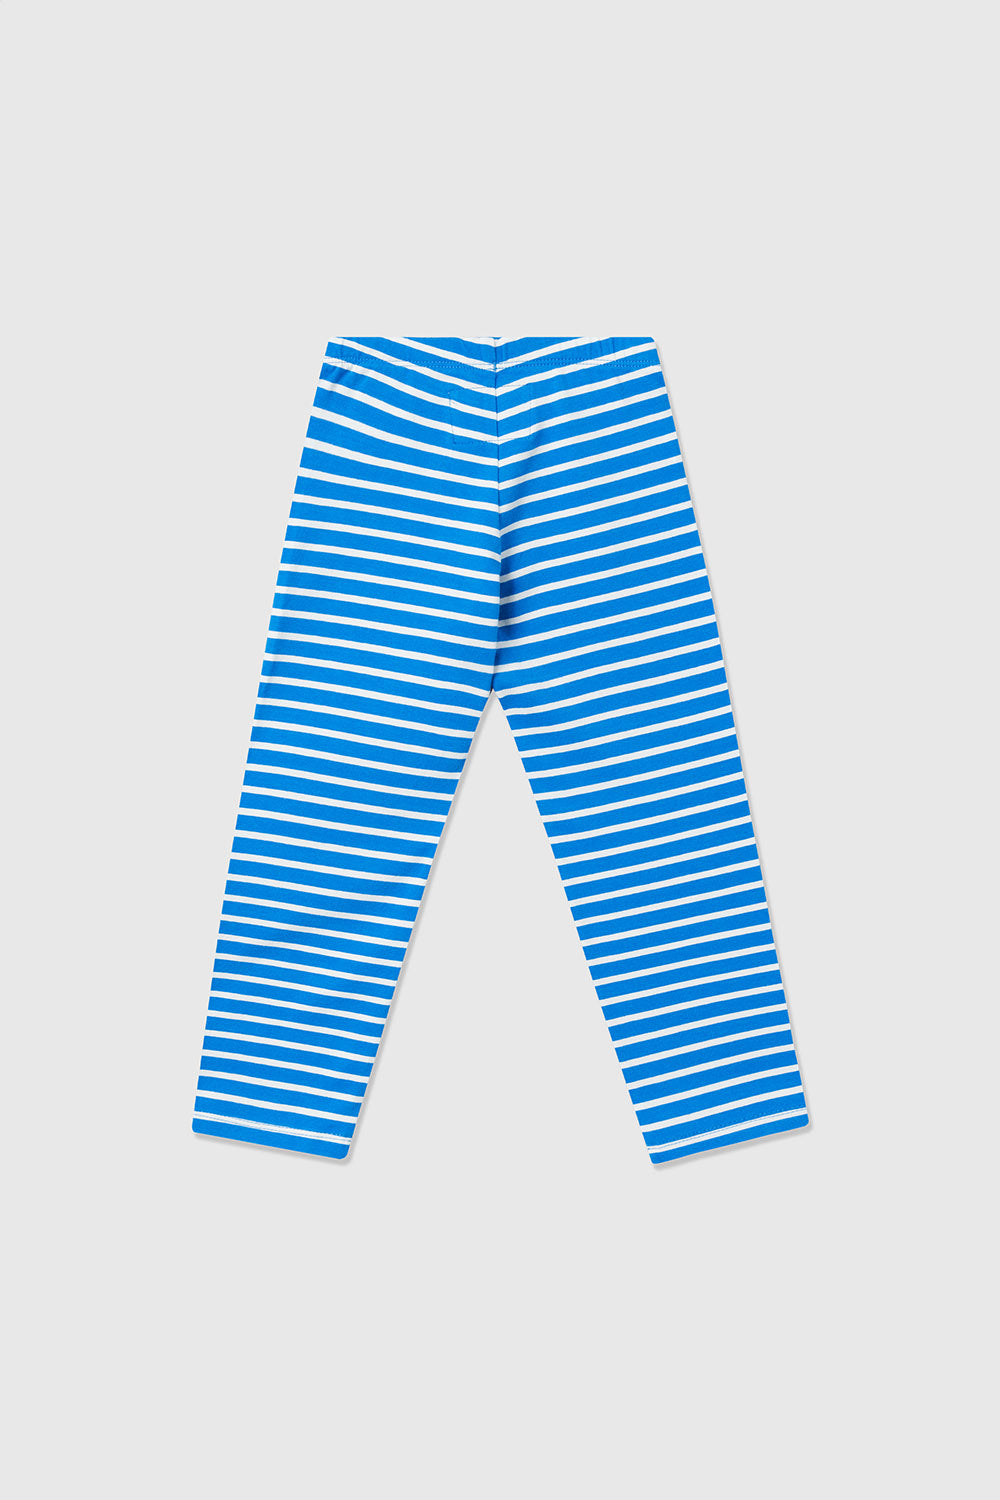 Azure blue stripes